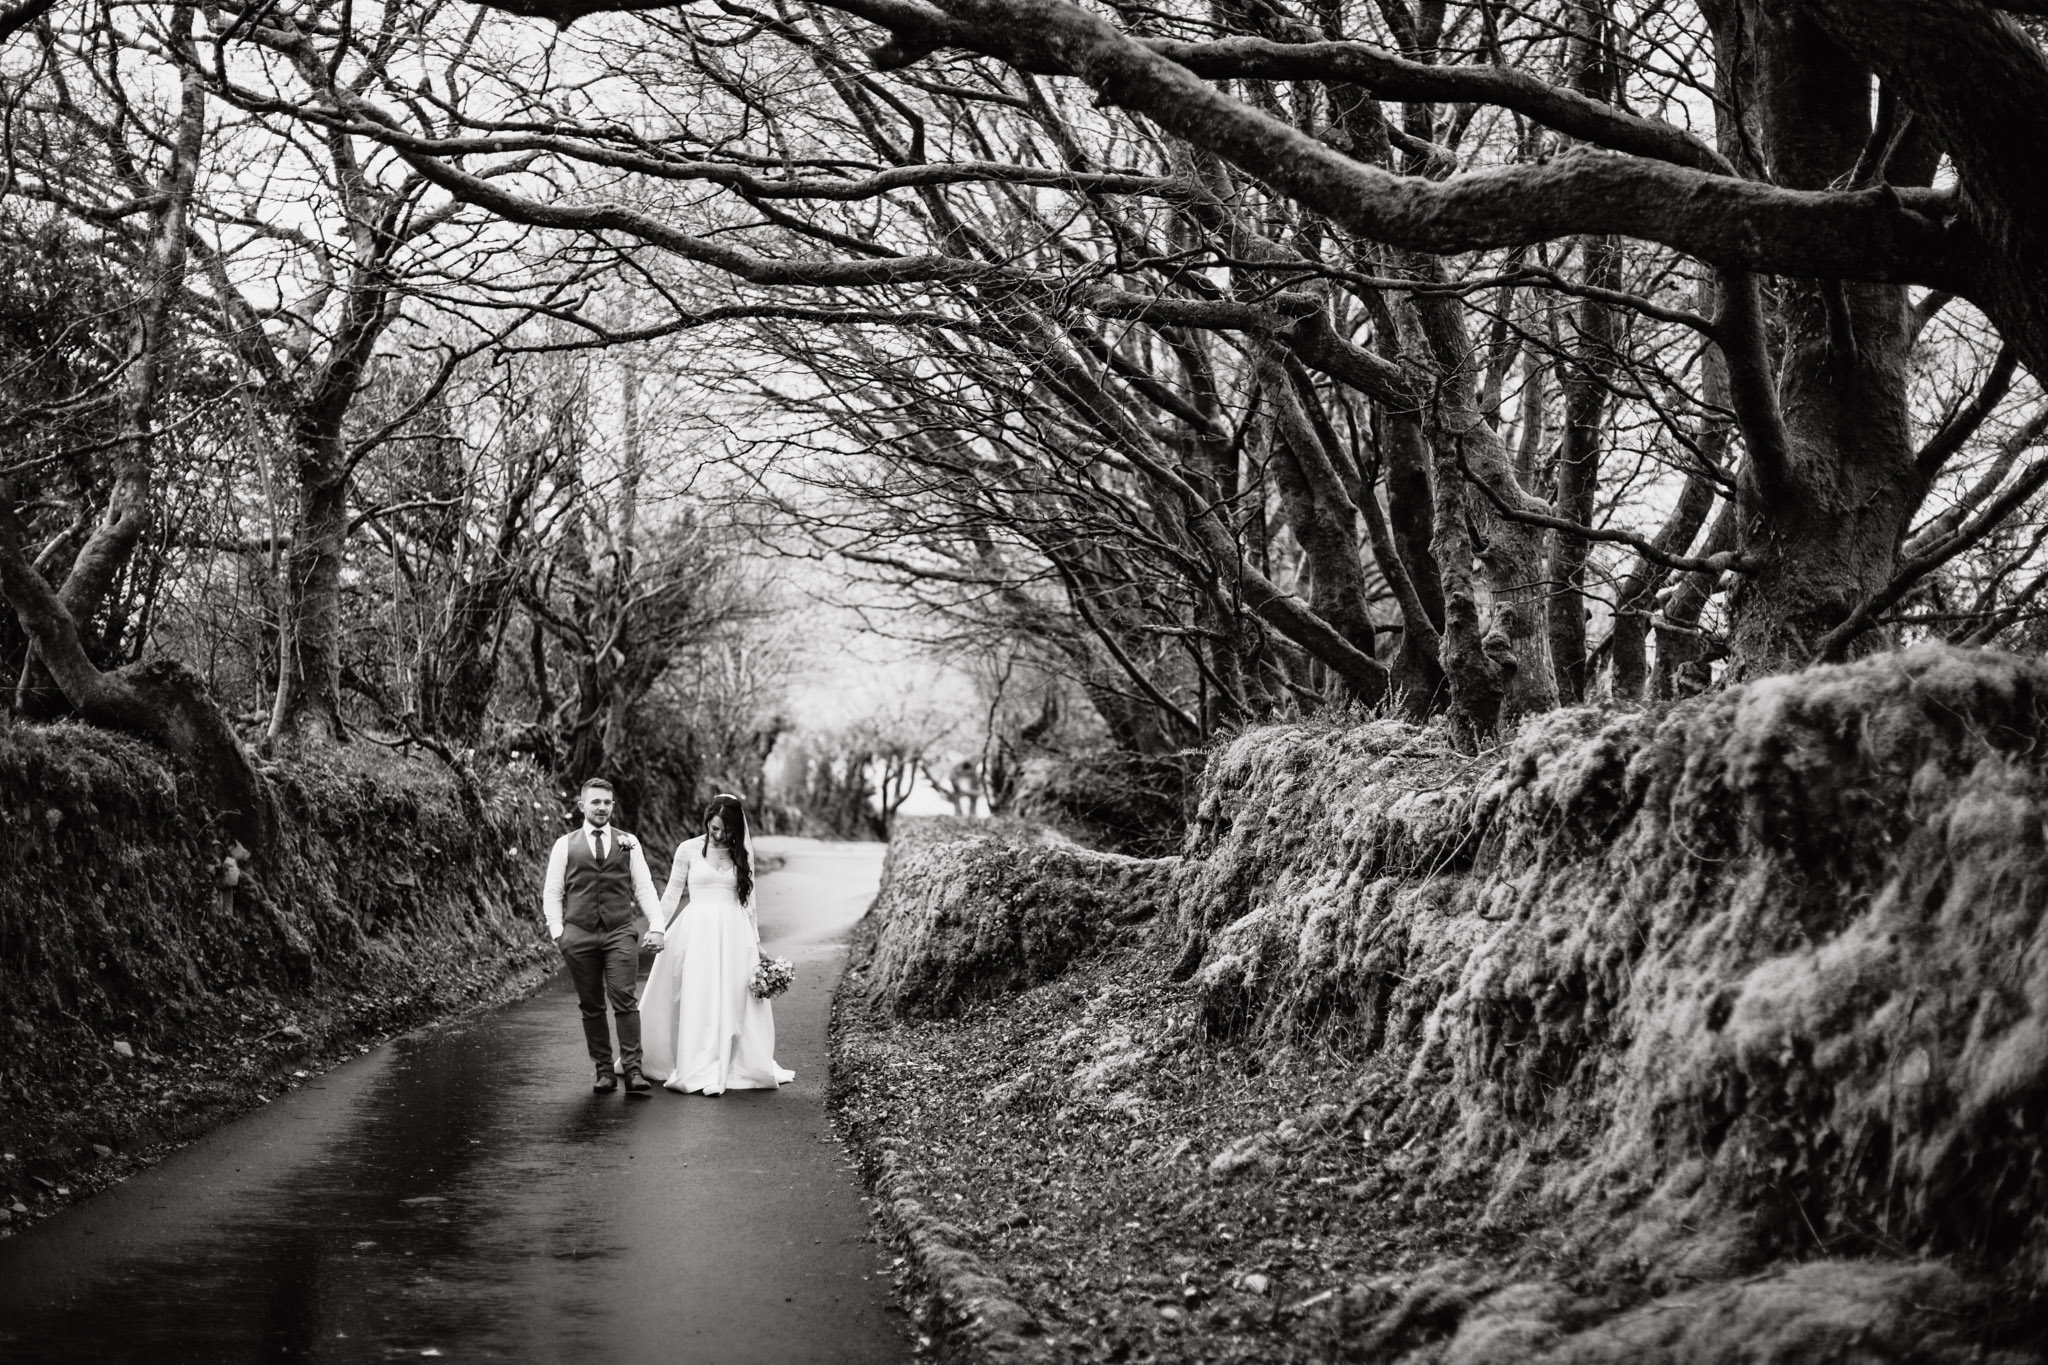 bride and groom in winder treelined driveway at trevenna barns cornwall wedding